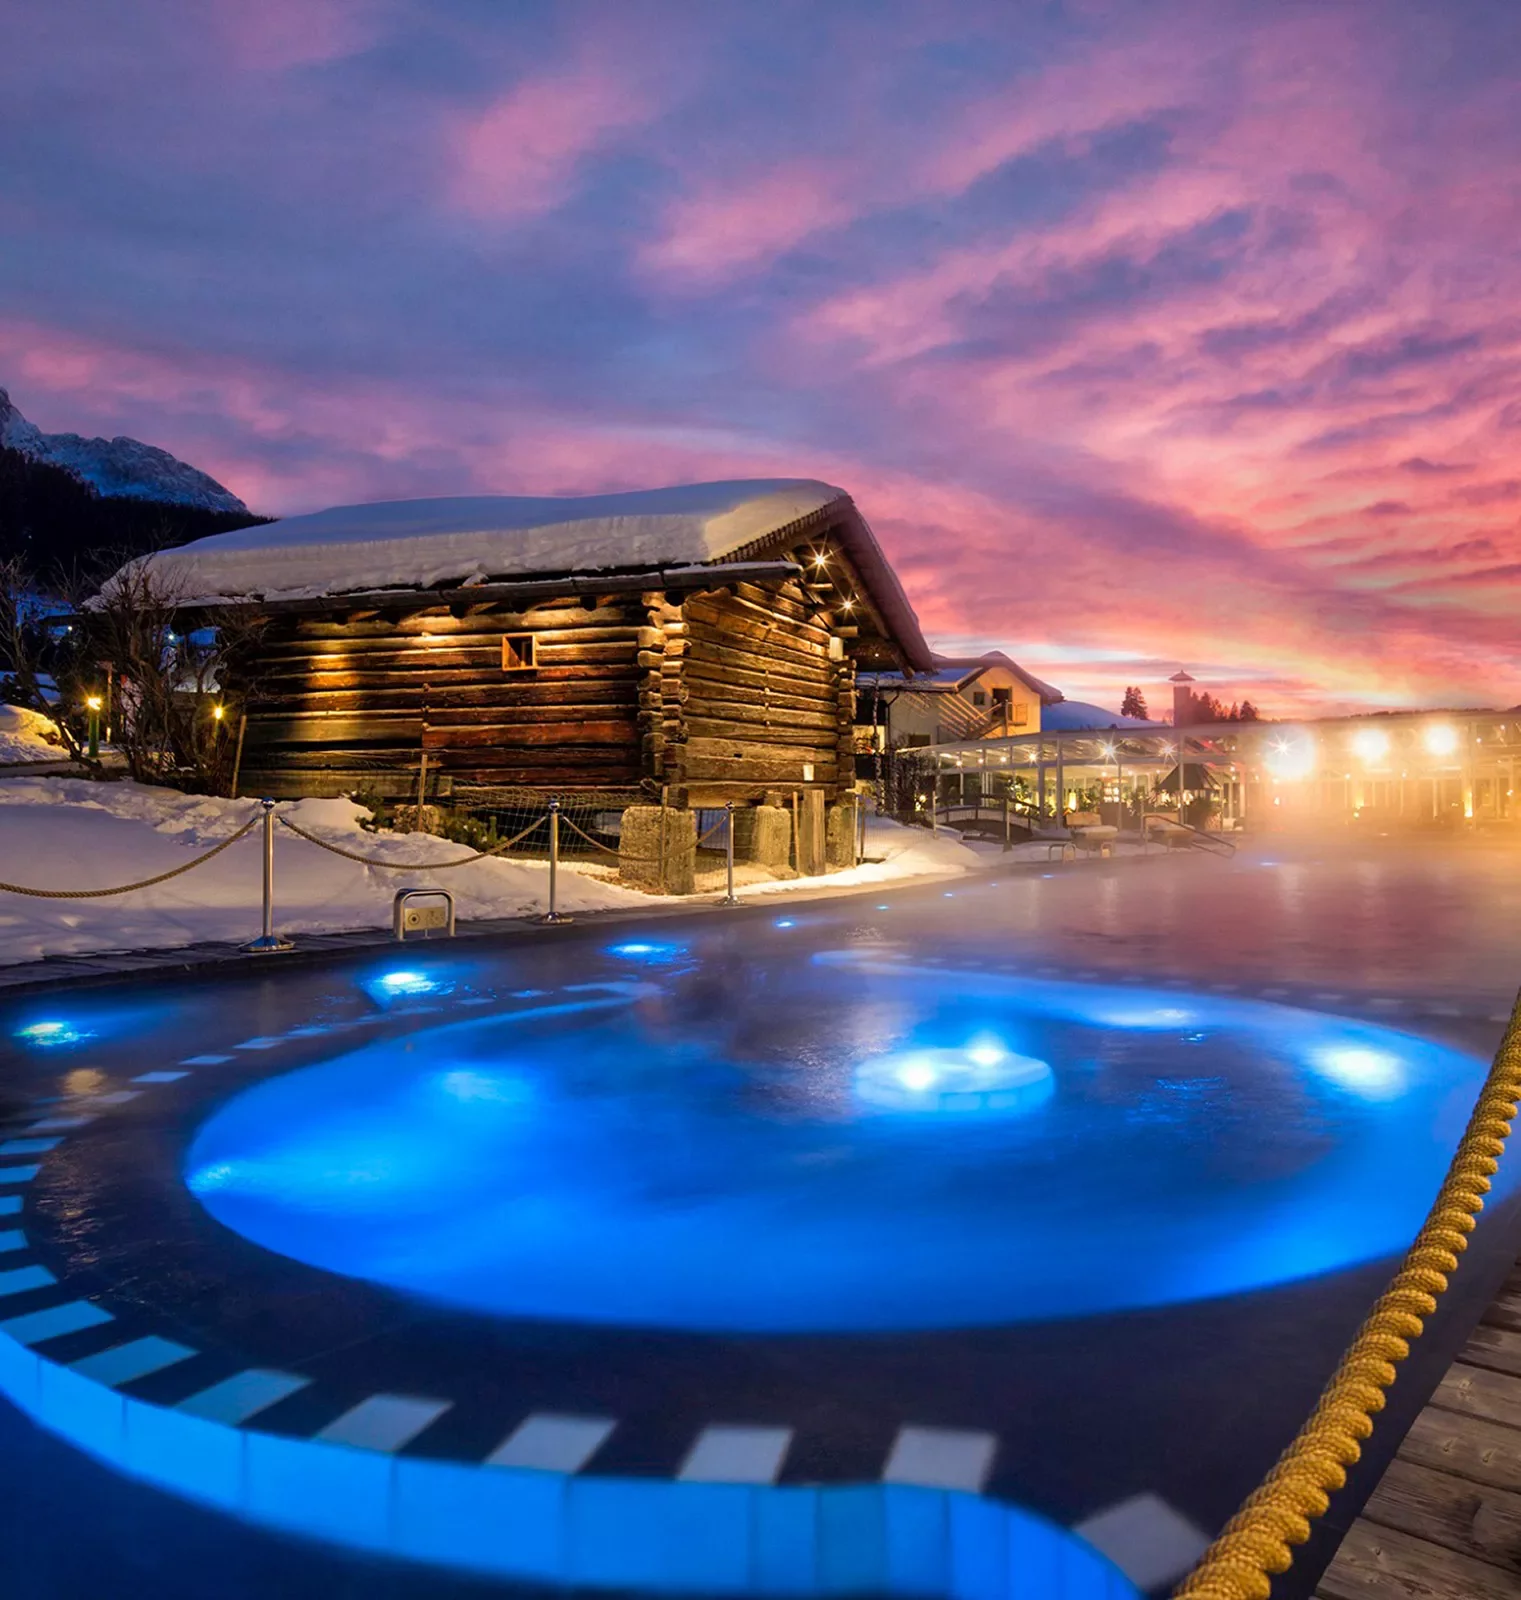 Northern lights shine over a small lodge and hot tub